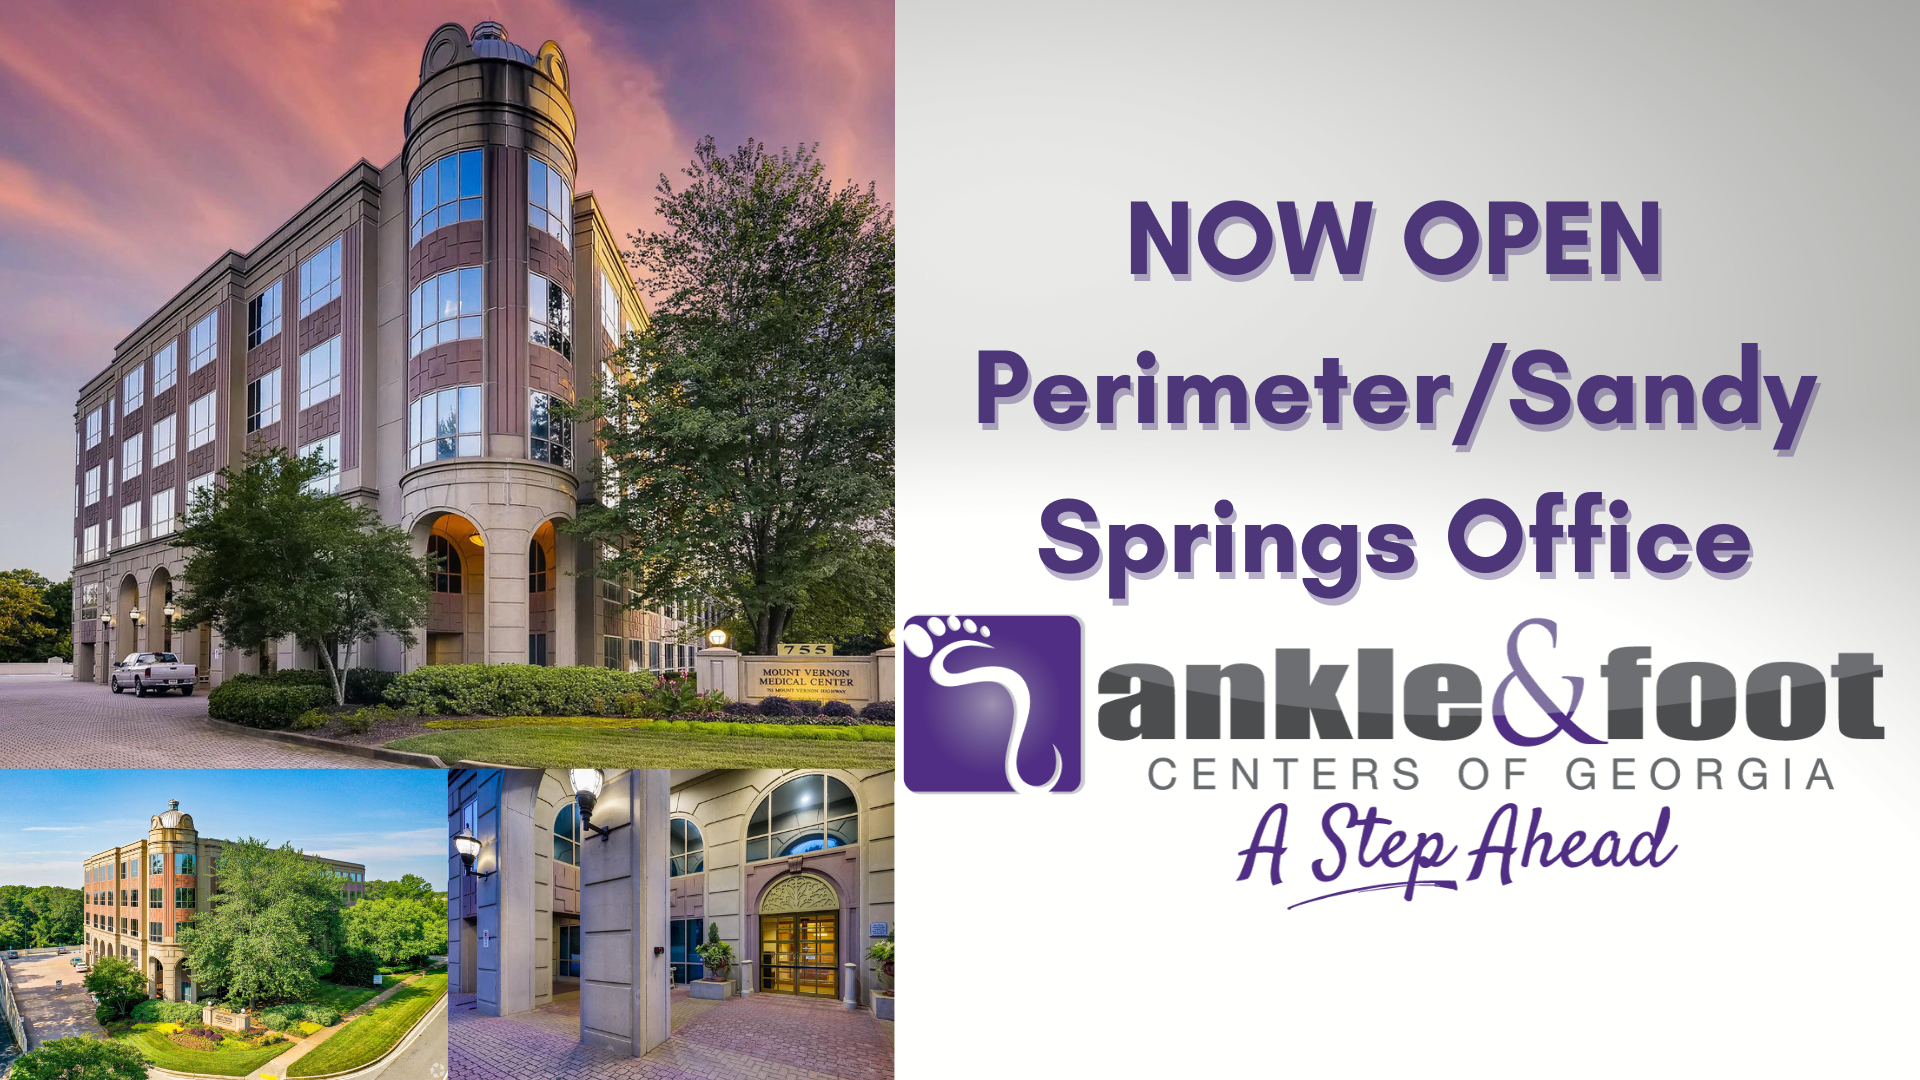 Perimeter/Sandy Spring Office – NOW OPEN!